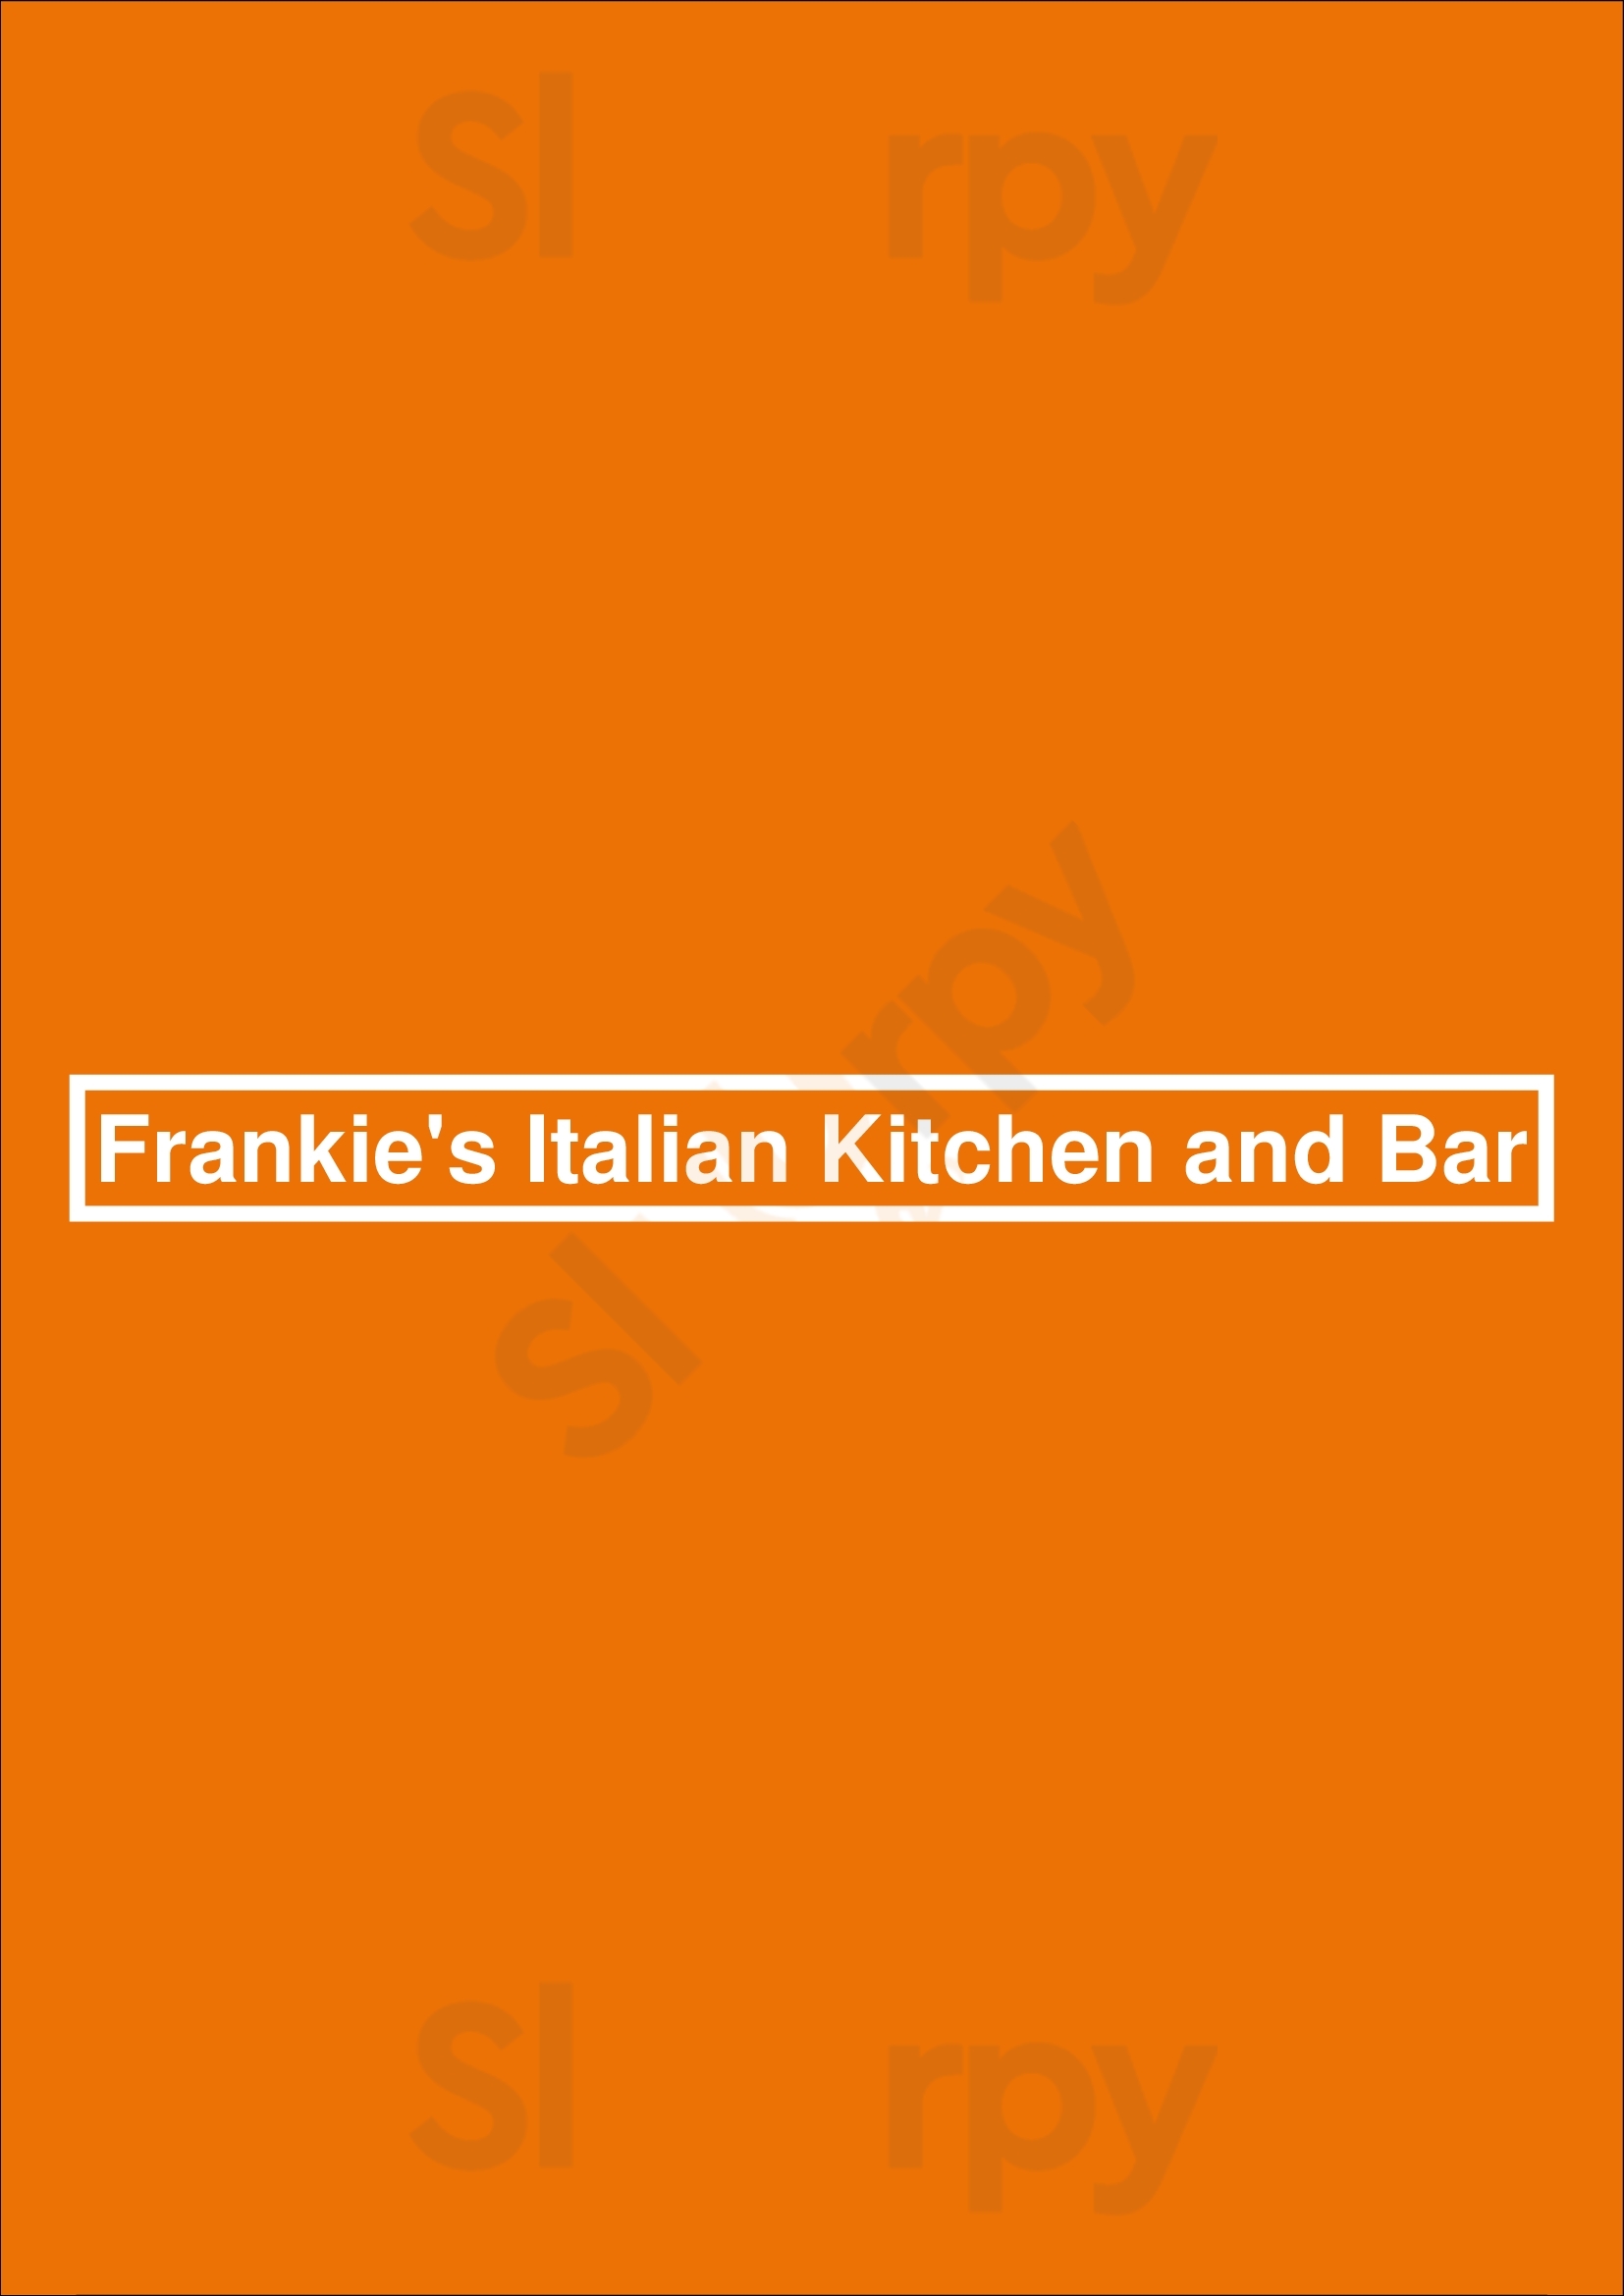 Frankie's Italian Kitchen & Bar Vancouver Vancouver Menu - 1